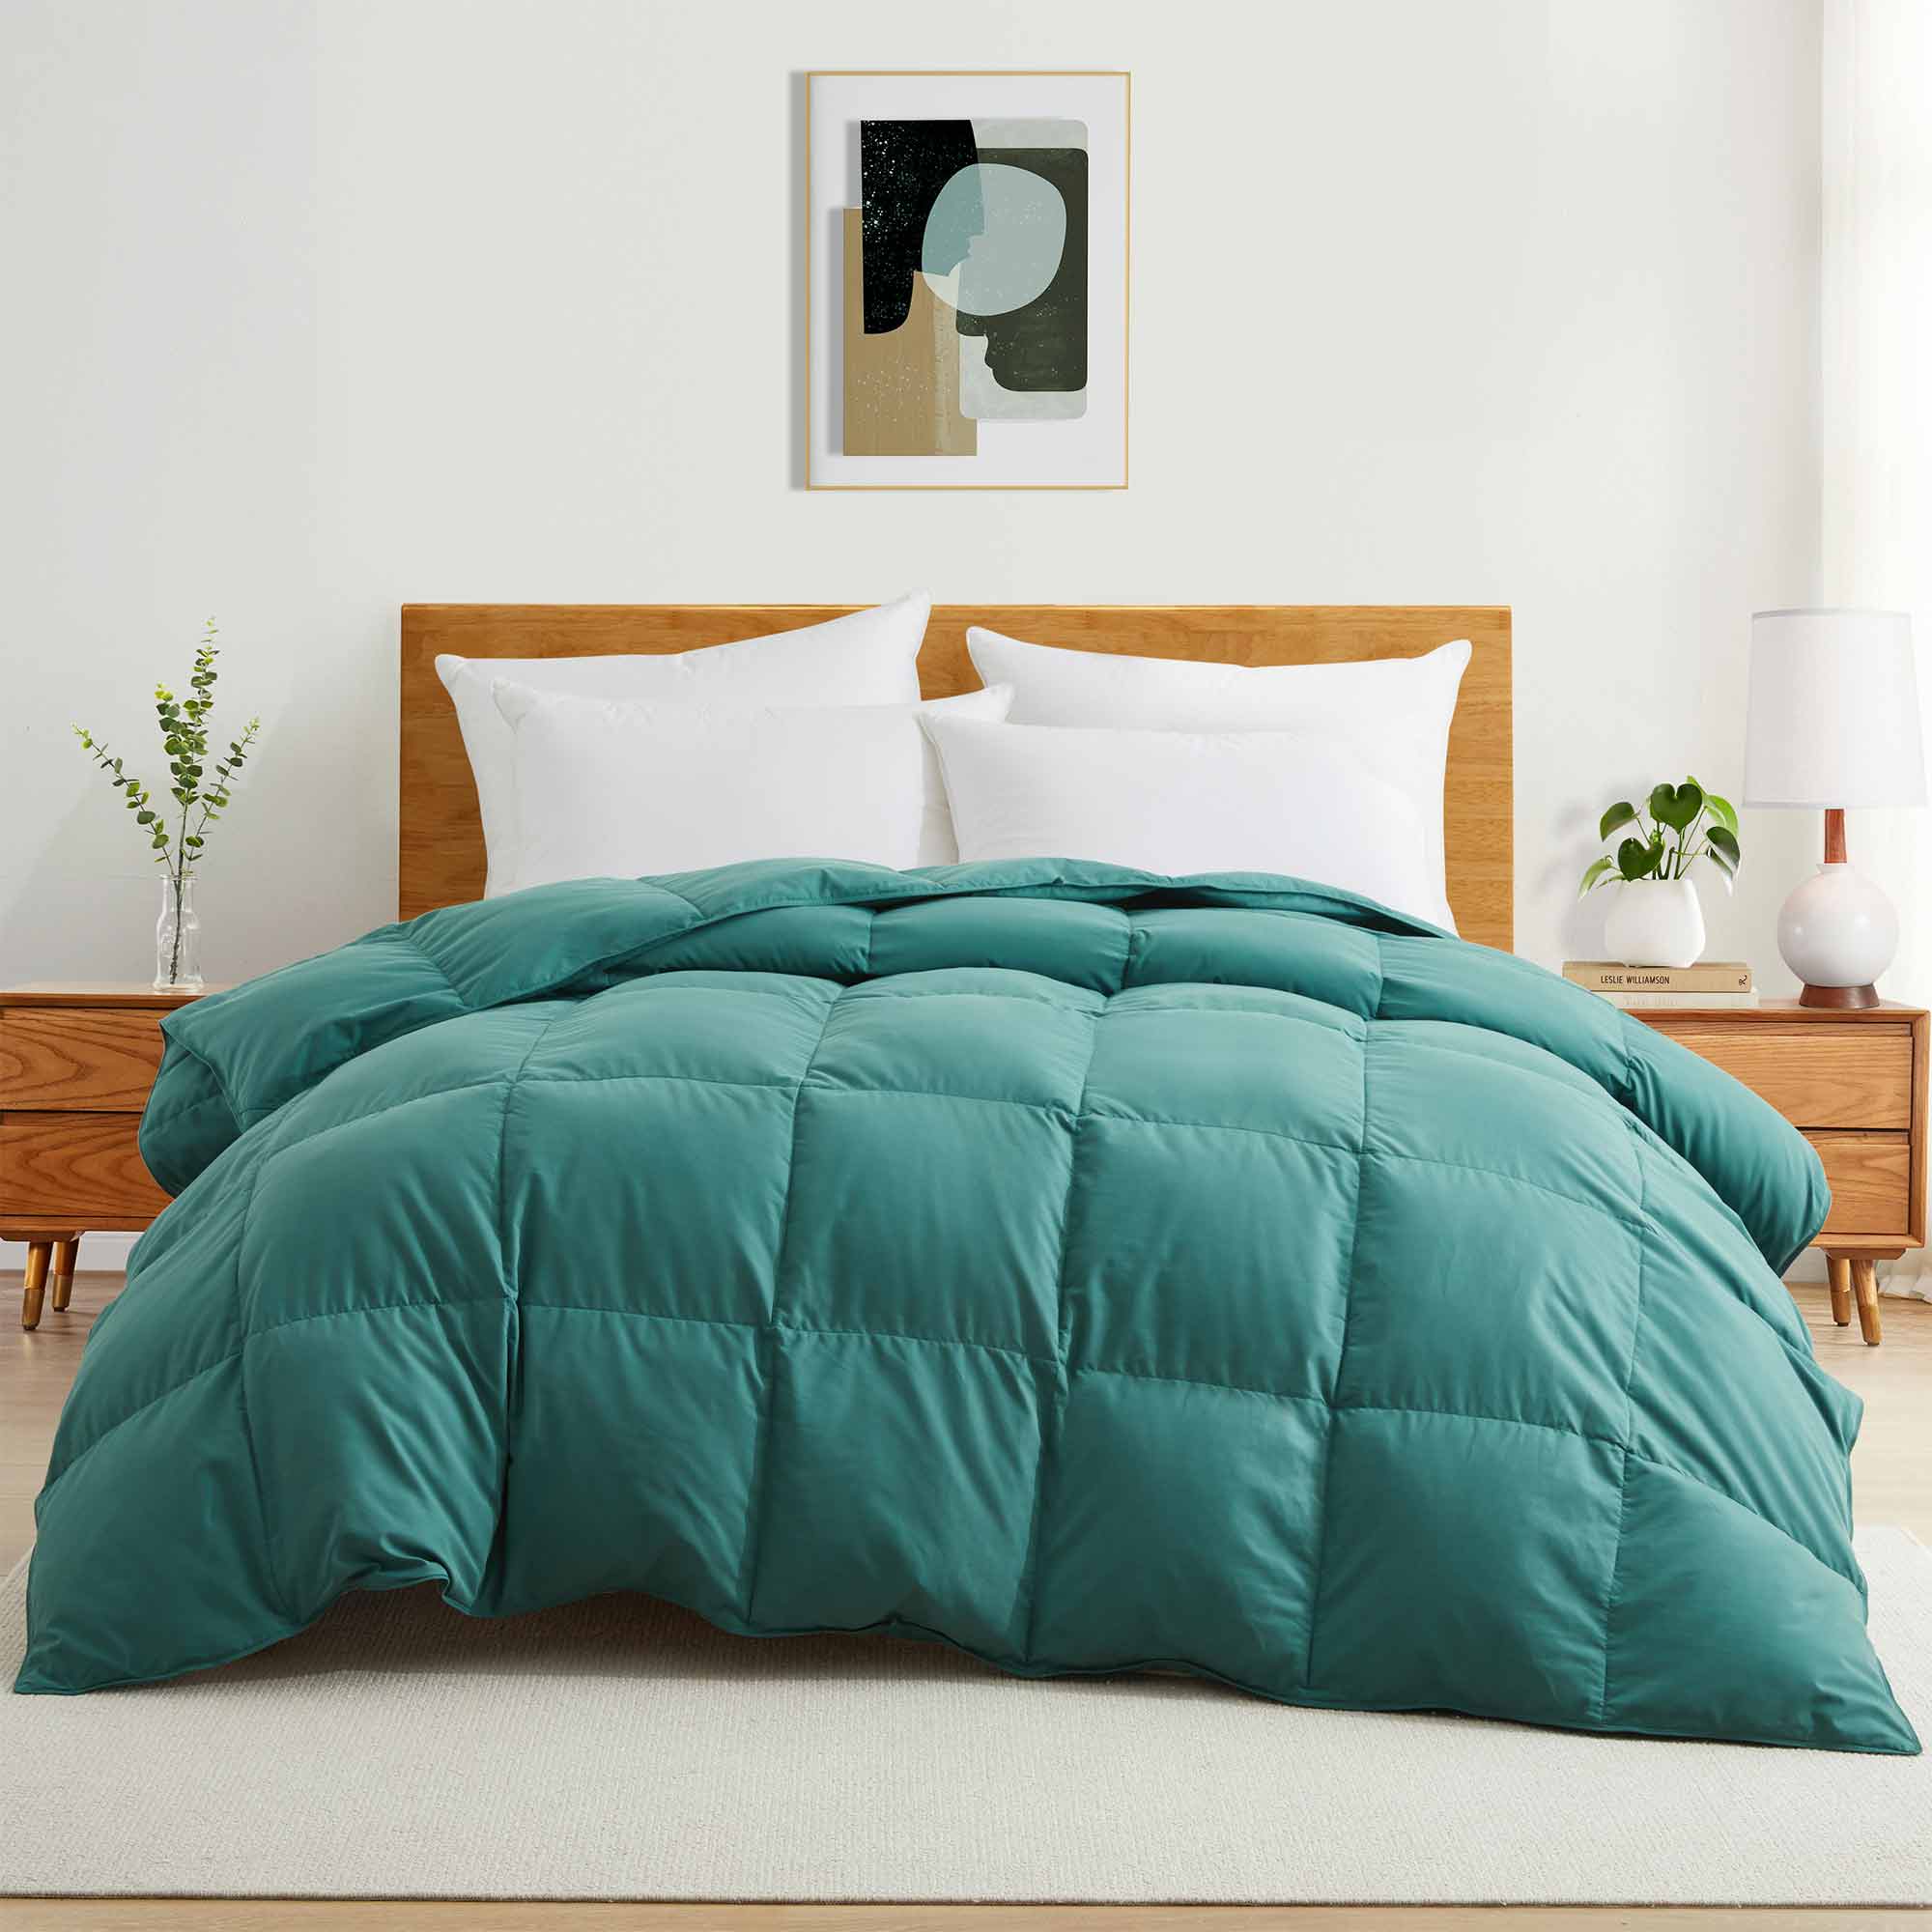 Puredown Lightweight Goose Down Feather Fiber Comforter, Soft and Fluffy  Comforter for Restful Sleep